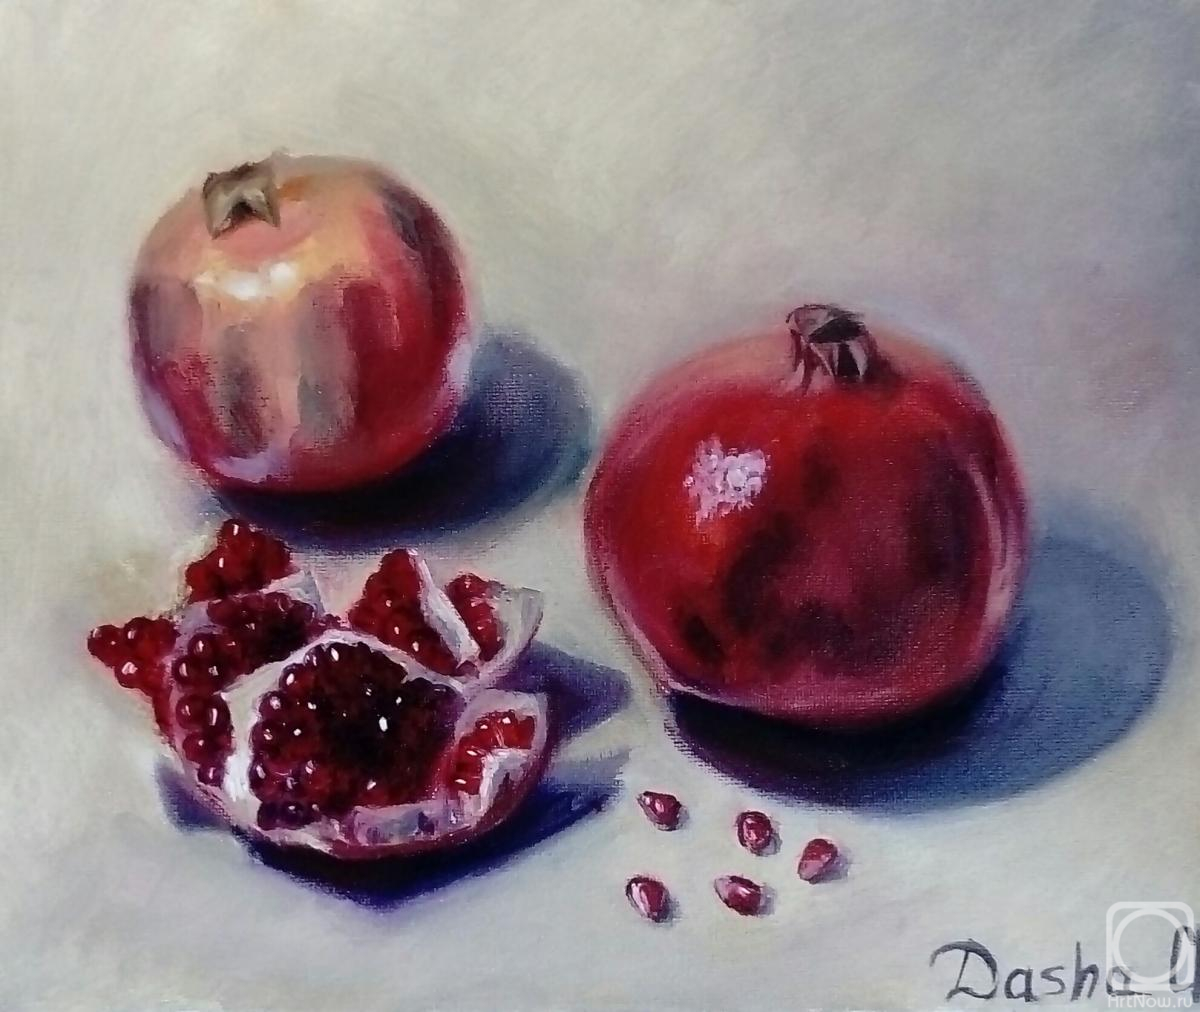 Chernousova Darya. The still-life painting with the pomegranates